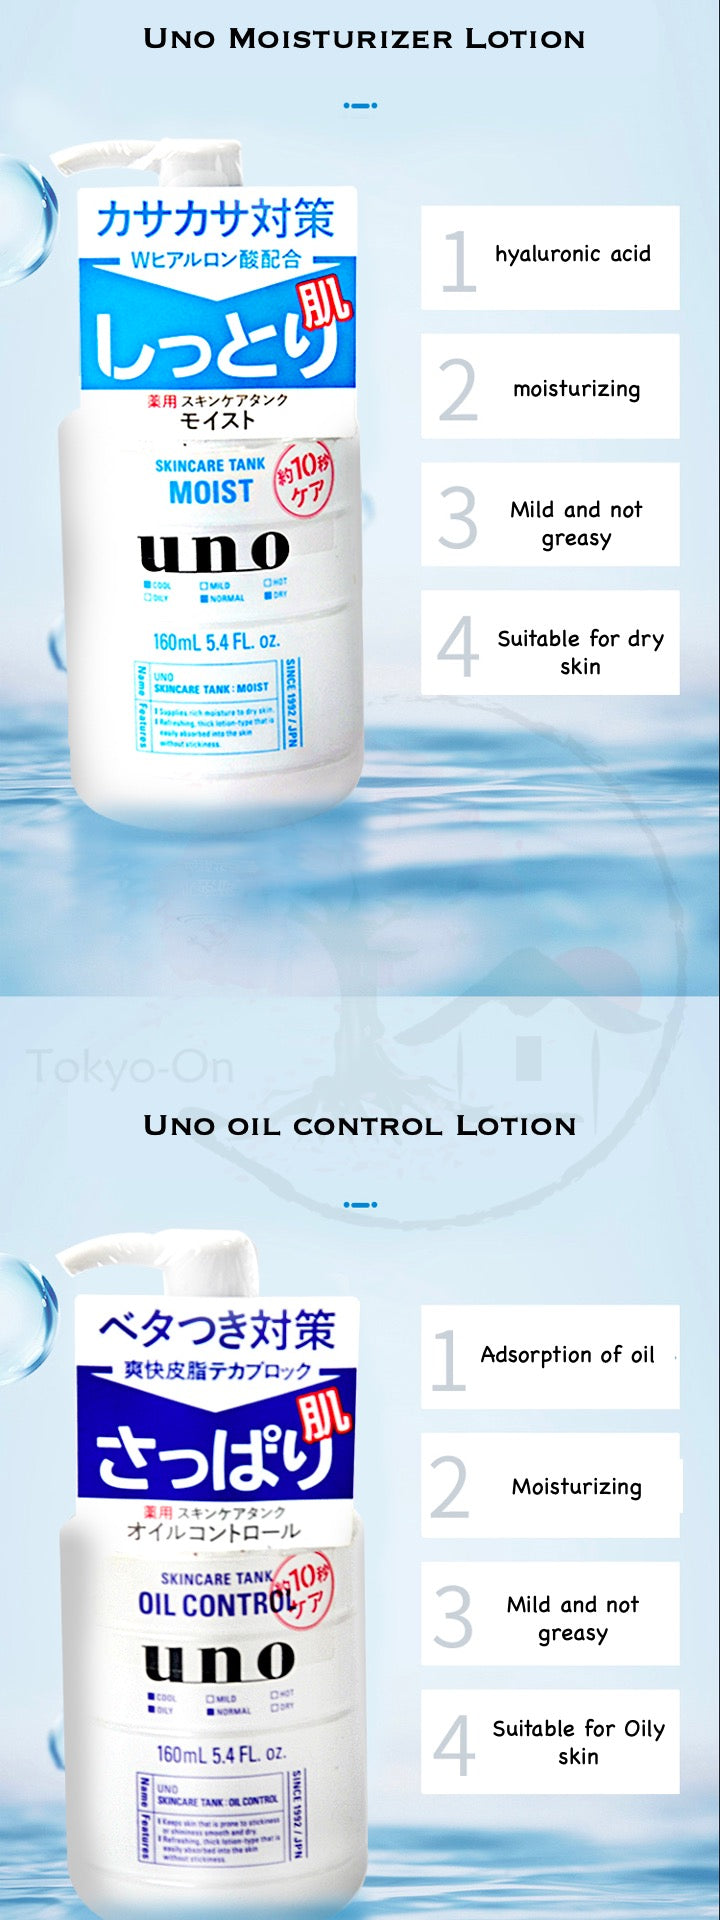 Tokyo-On Shiseido Uno SkinCare Tank Oil Control Lotion 160ml